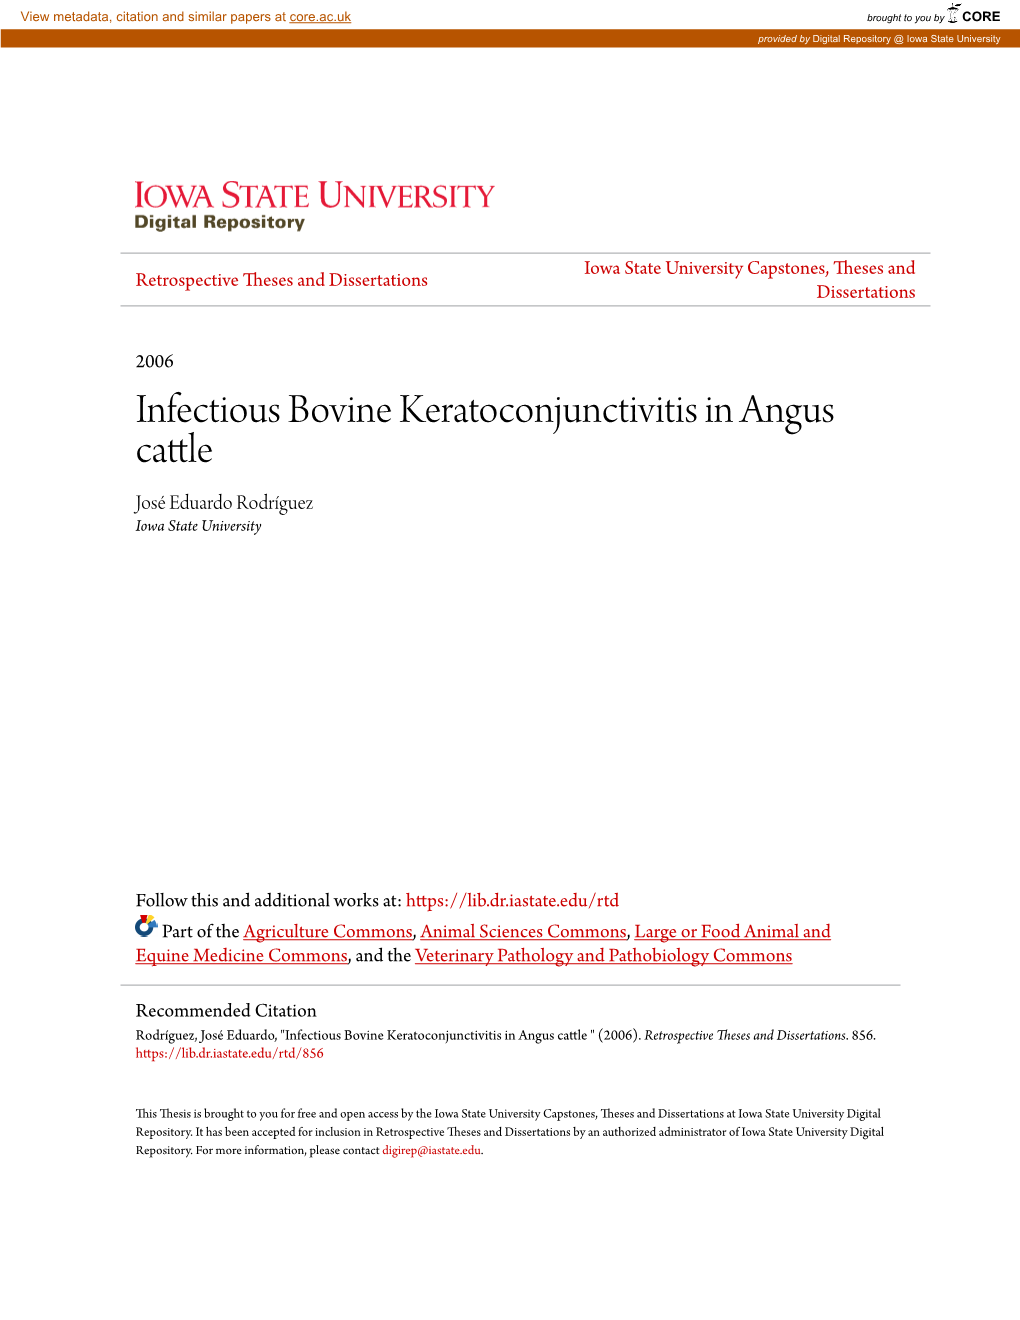 Infectious Bovine Keratoconjunctivitis in Angus Cattle José Eduardo Rodríguez Iowa State University